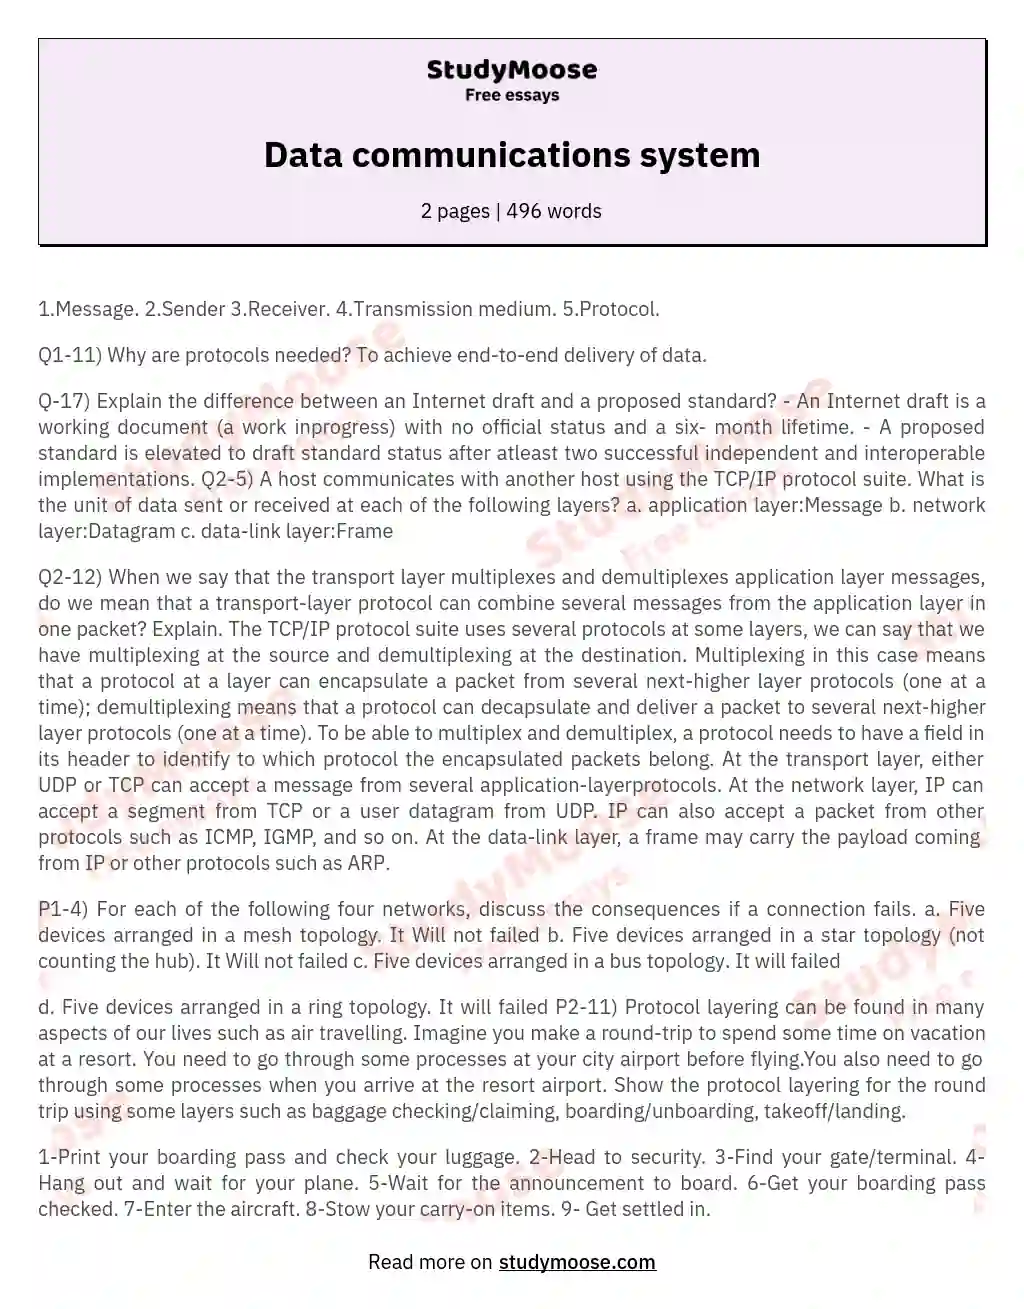 Data communications system essay